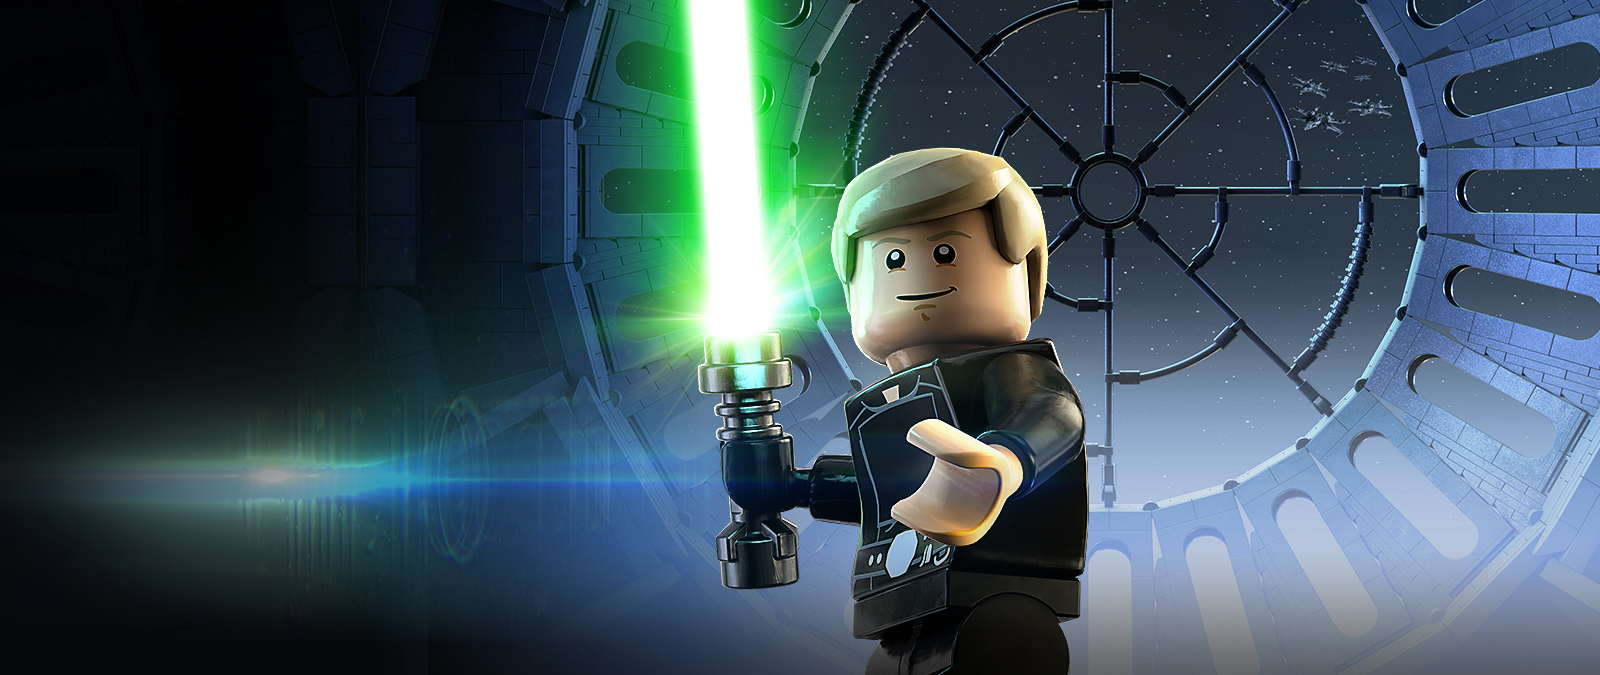 Luke Skywalker unleashes his lightsaber on the observation deck of the Death Star.